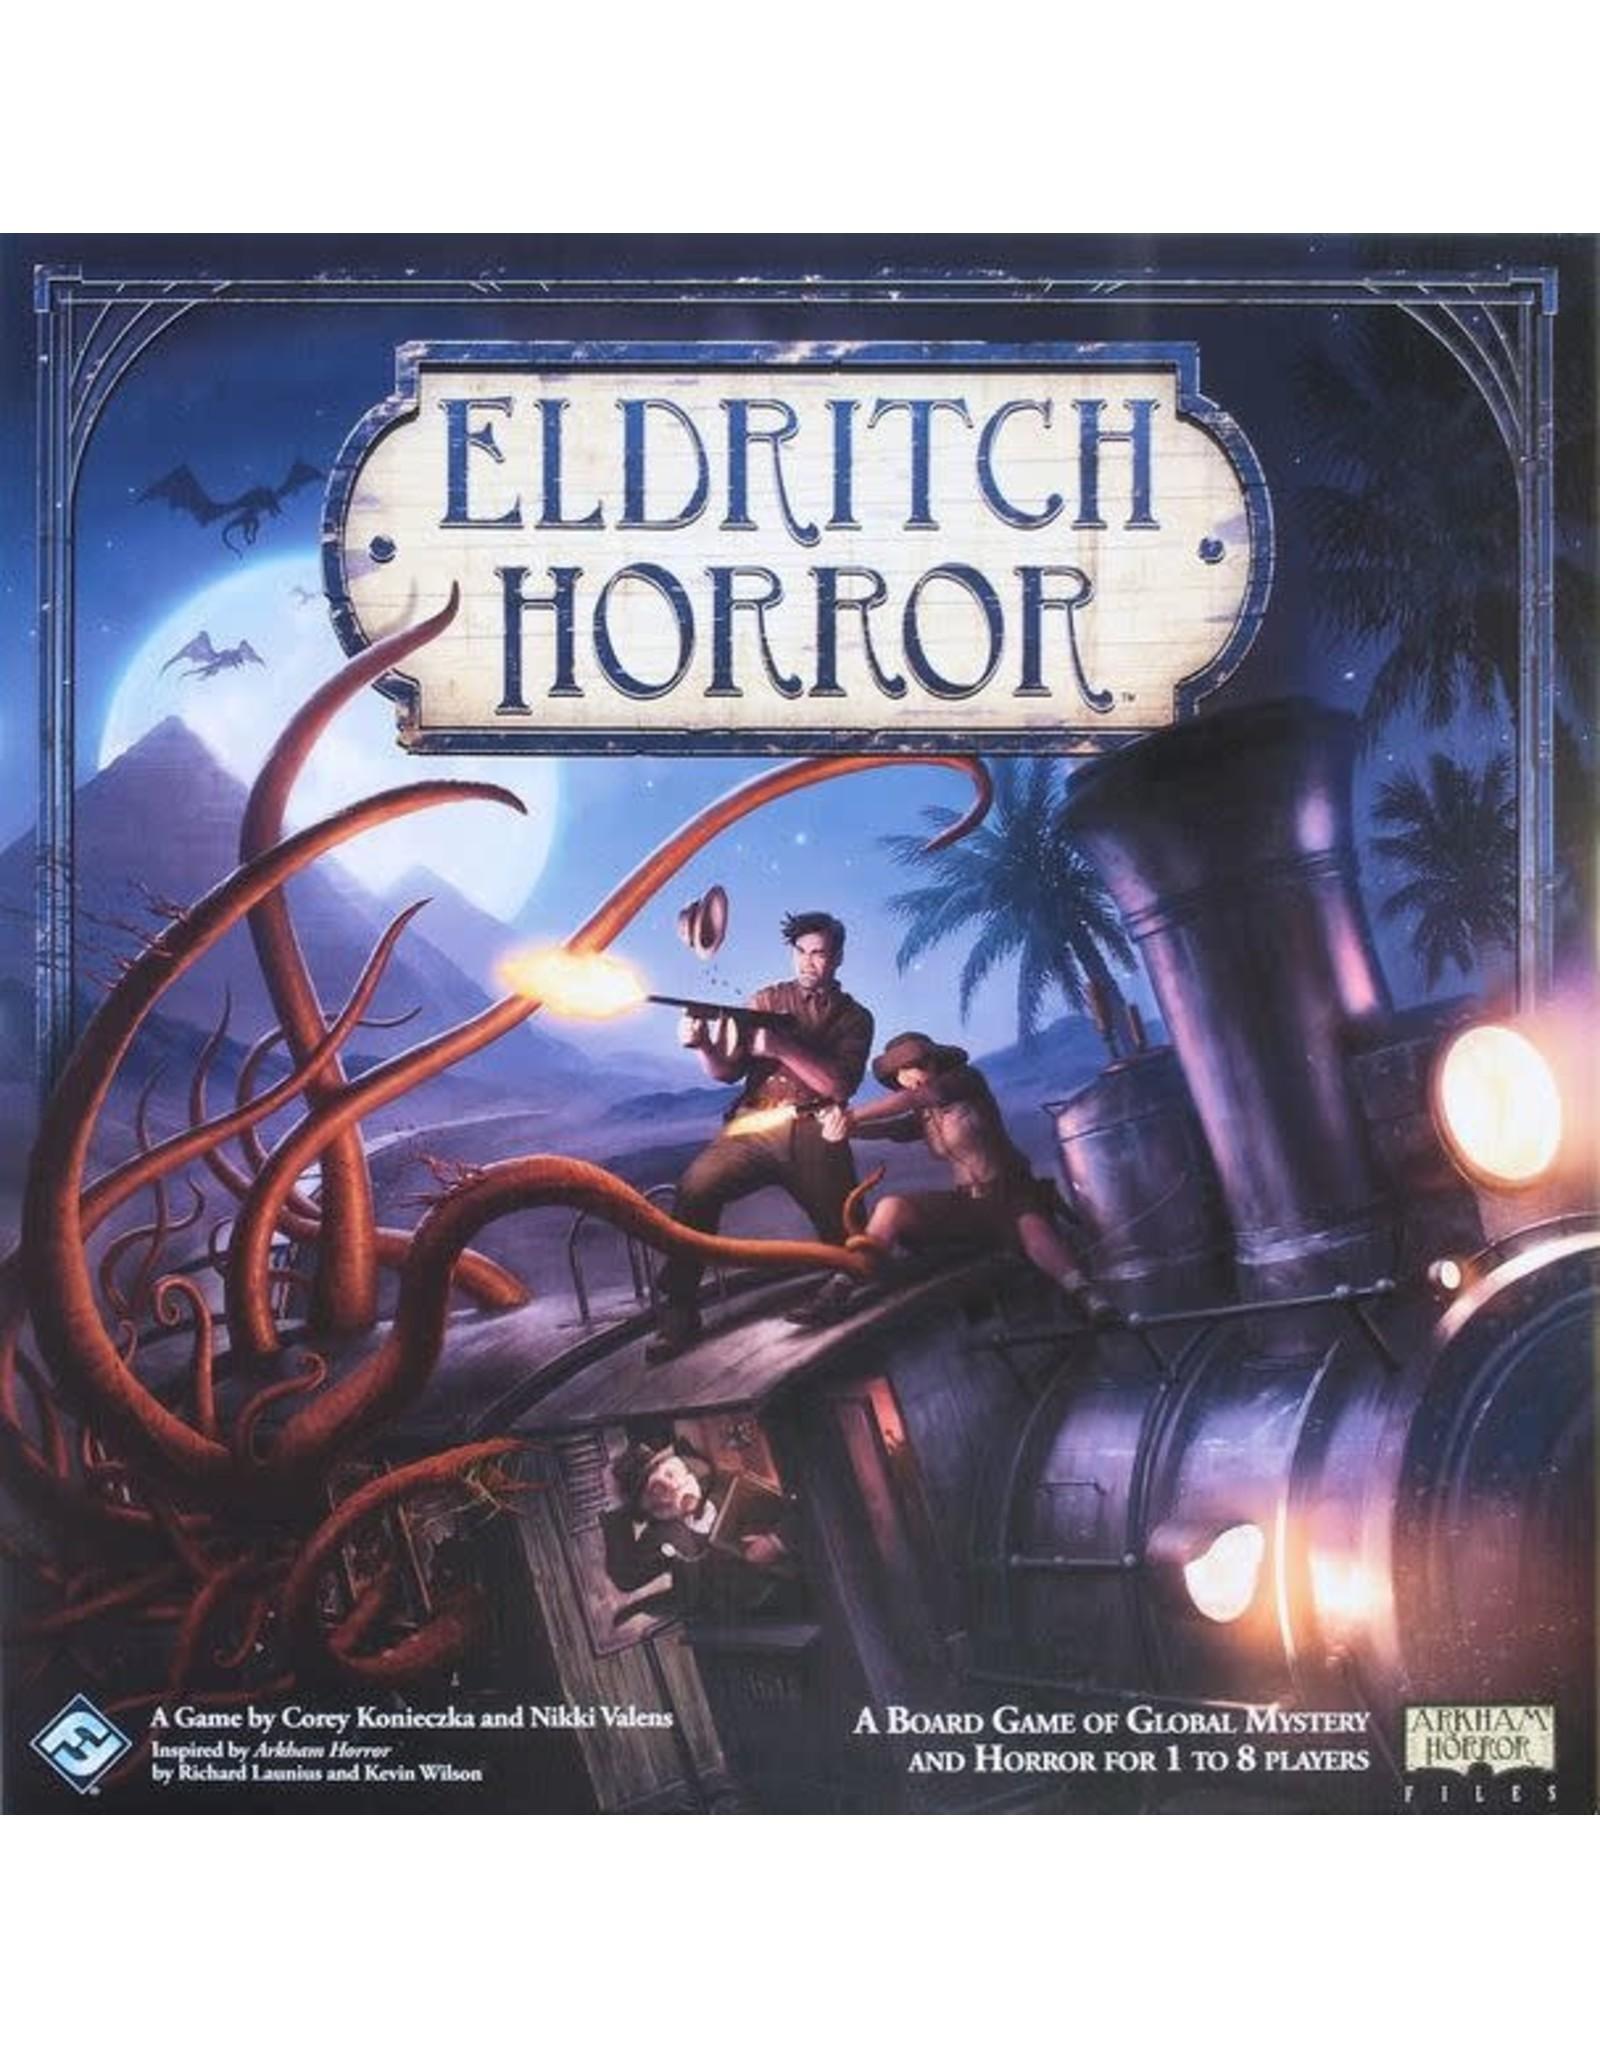 Eldritch Horror review